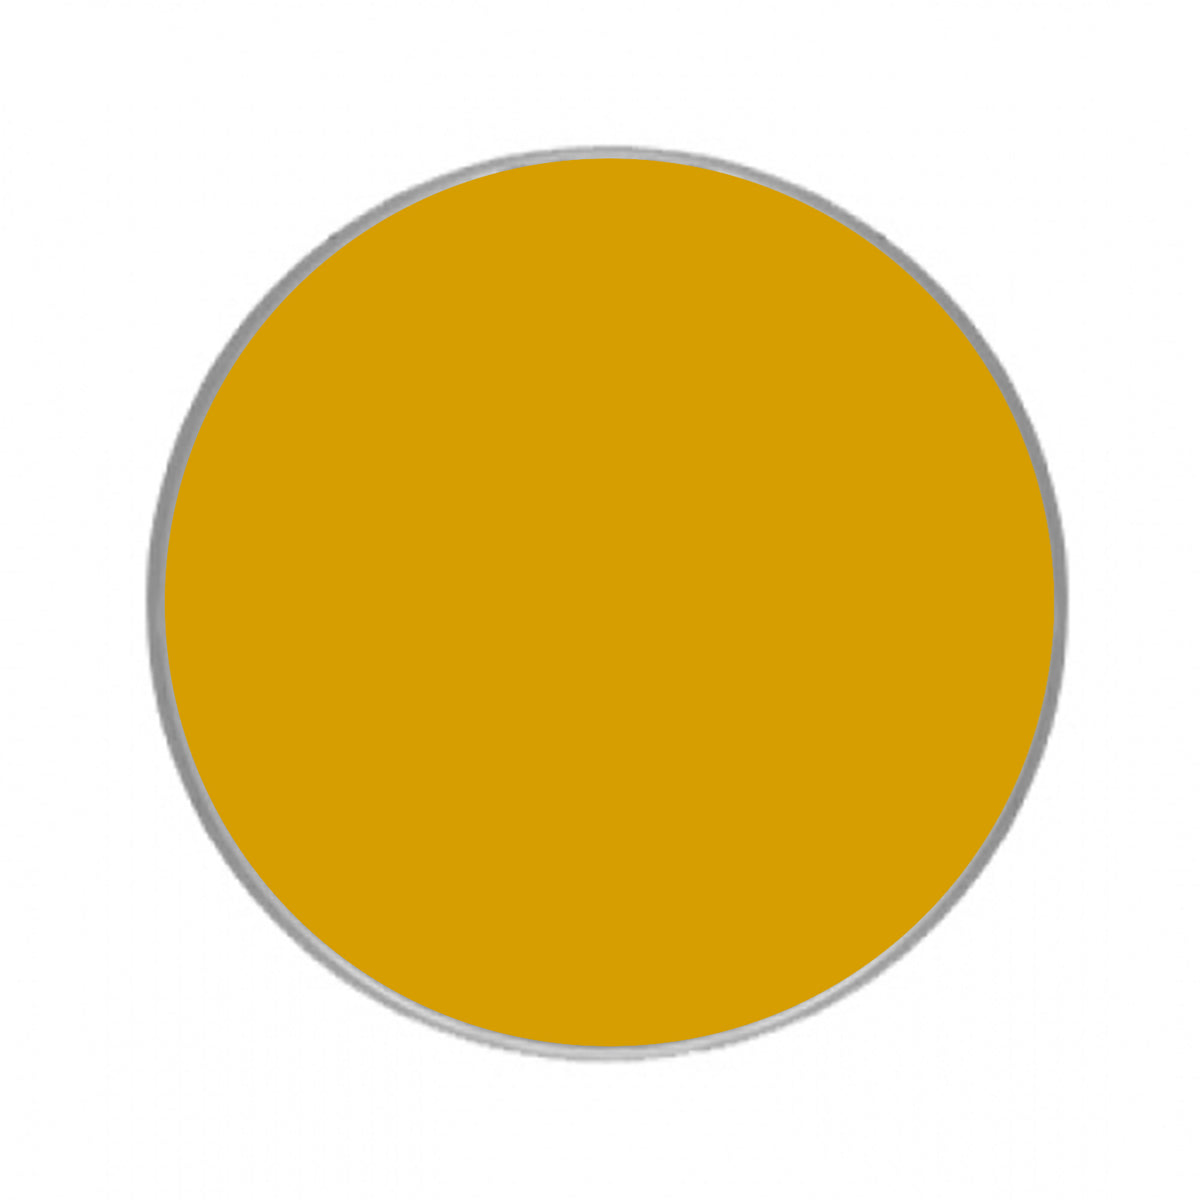 Kryolan Aquacolor - Bright Yellow - 509